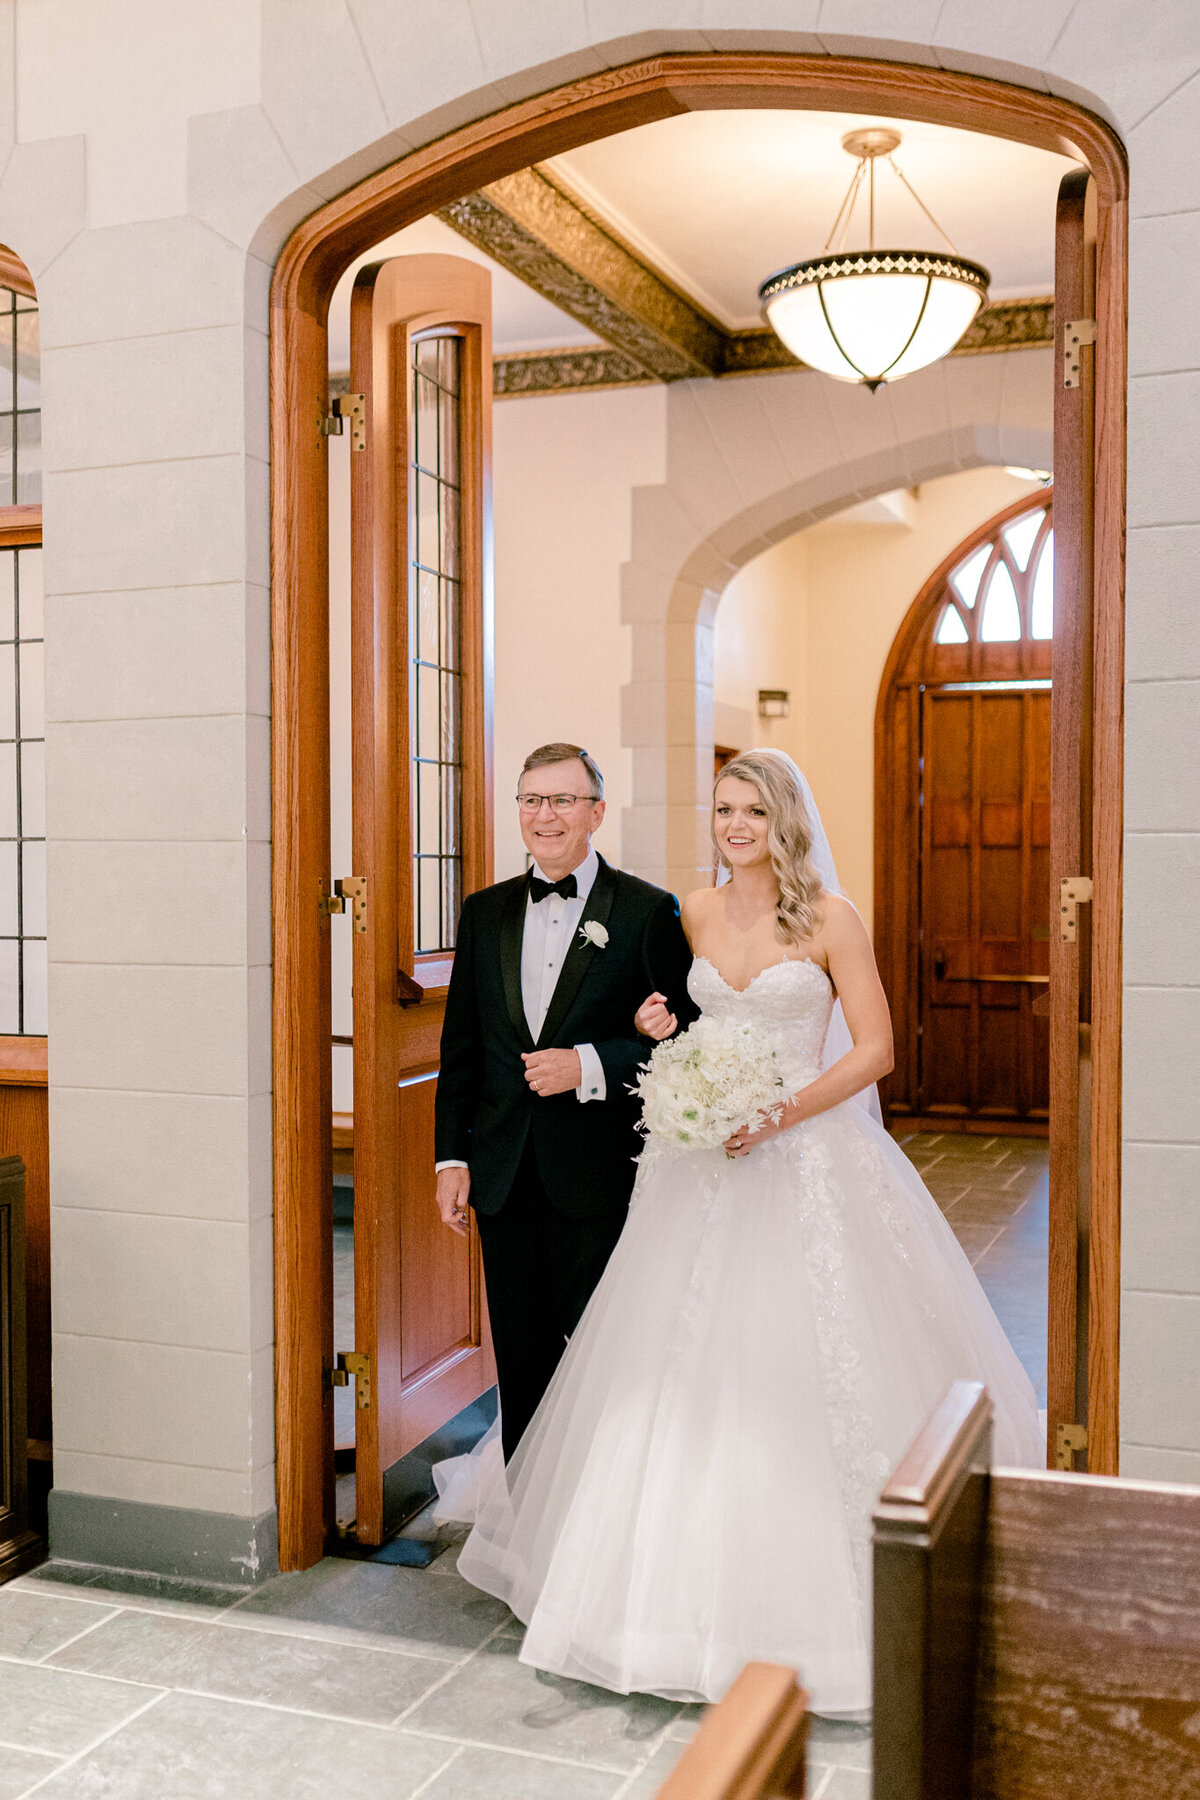 Shelby & Thomas's Wedding at HPUMC The Room on Main | Dallas Wedding Photographer | Sami Kathryn Photography-107